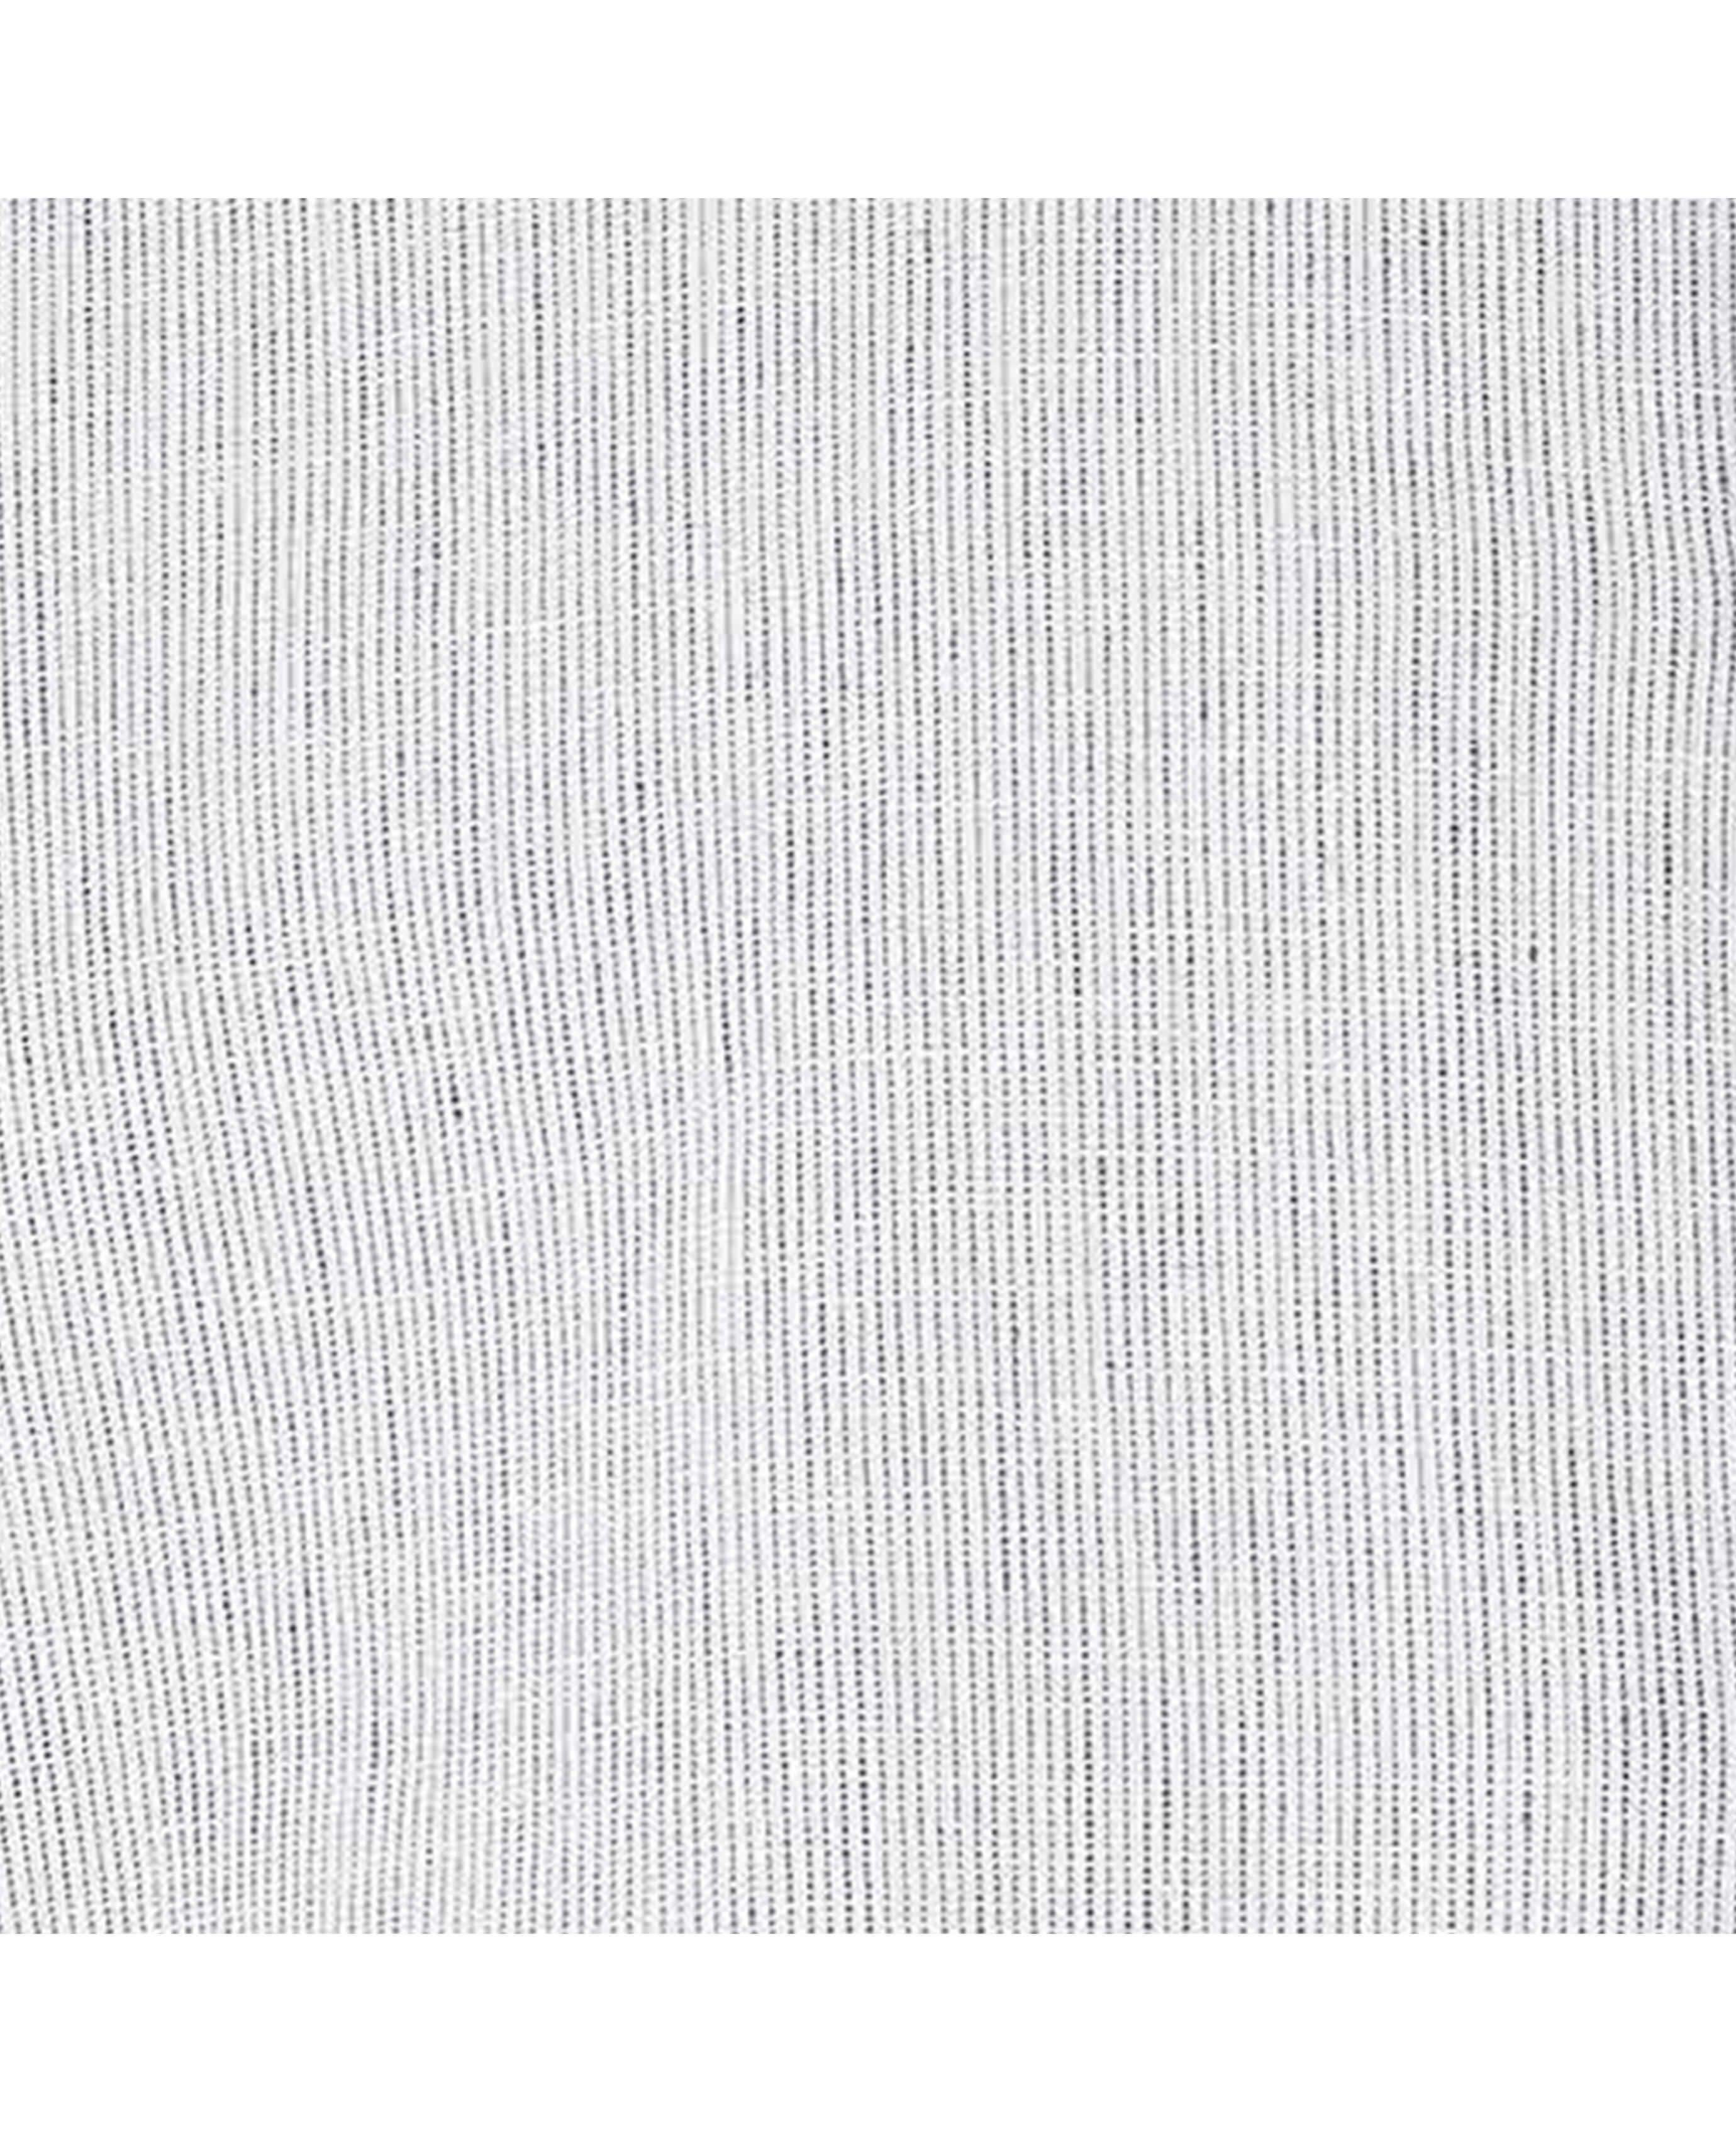 Men’s white and navy stripe linen/cotton blend shirt | Savile Row Co